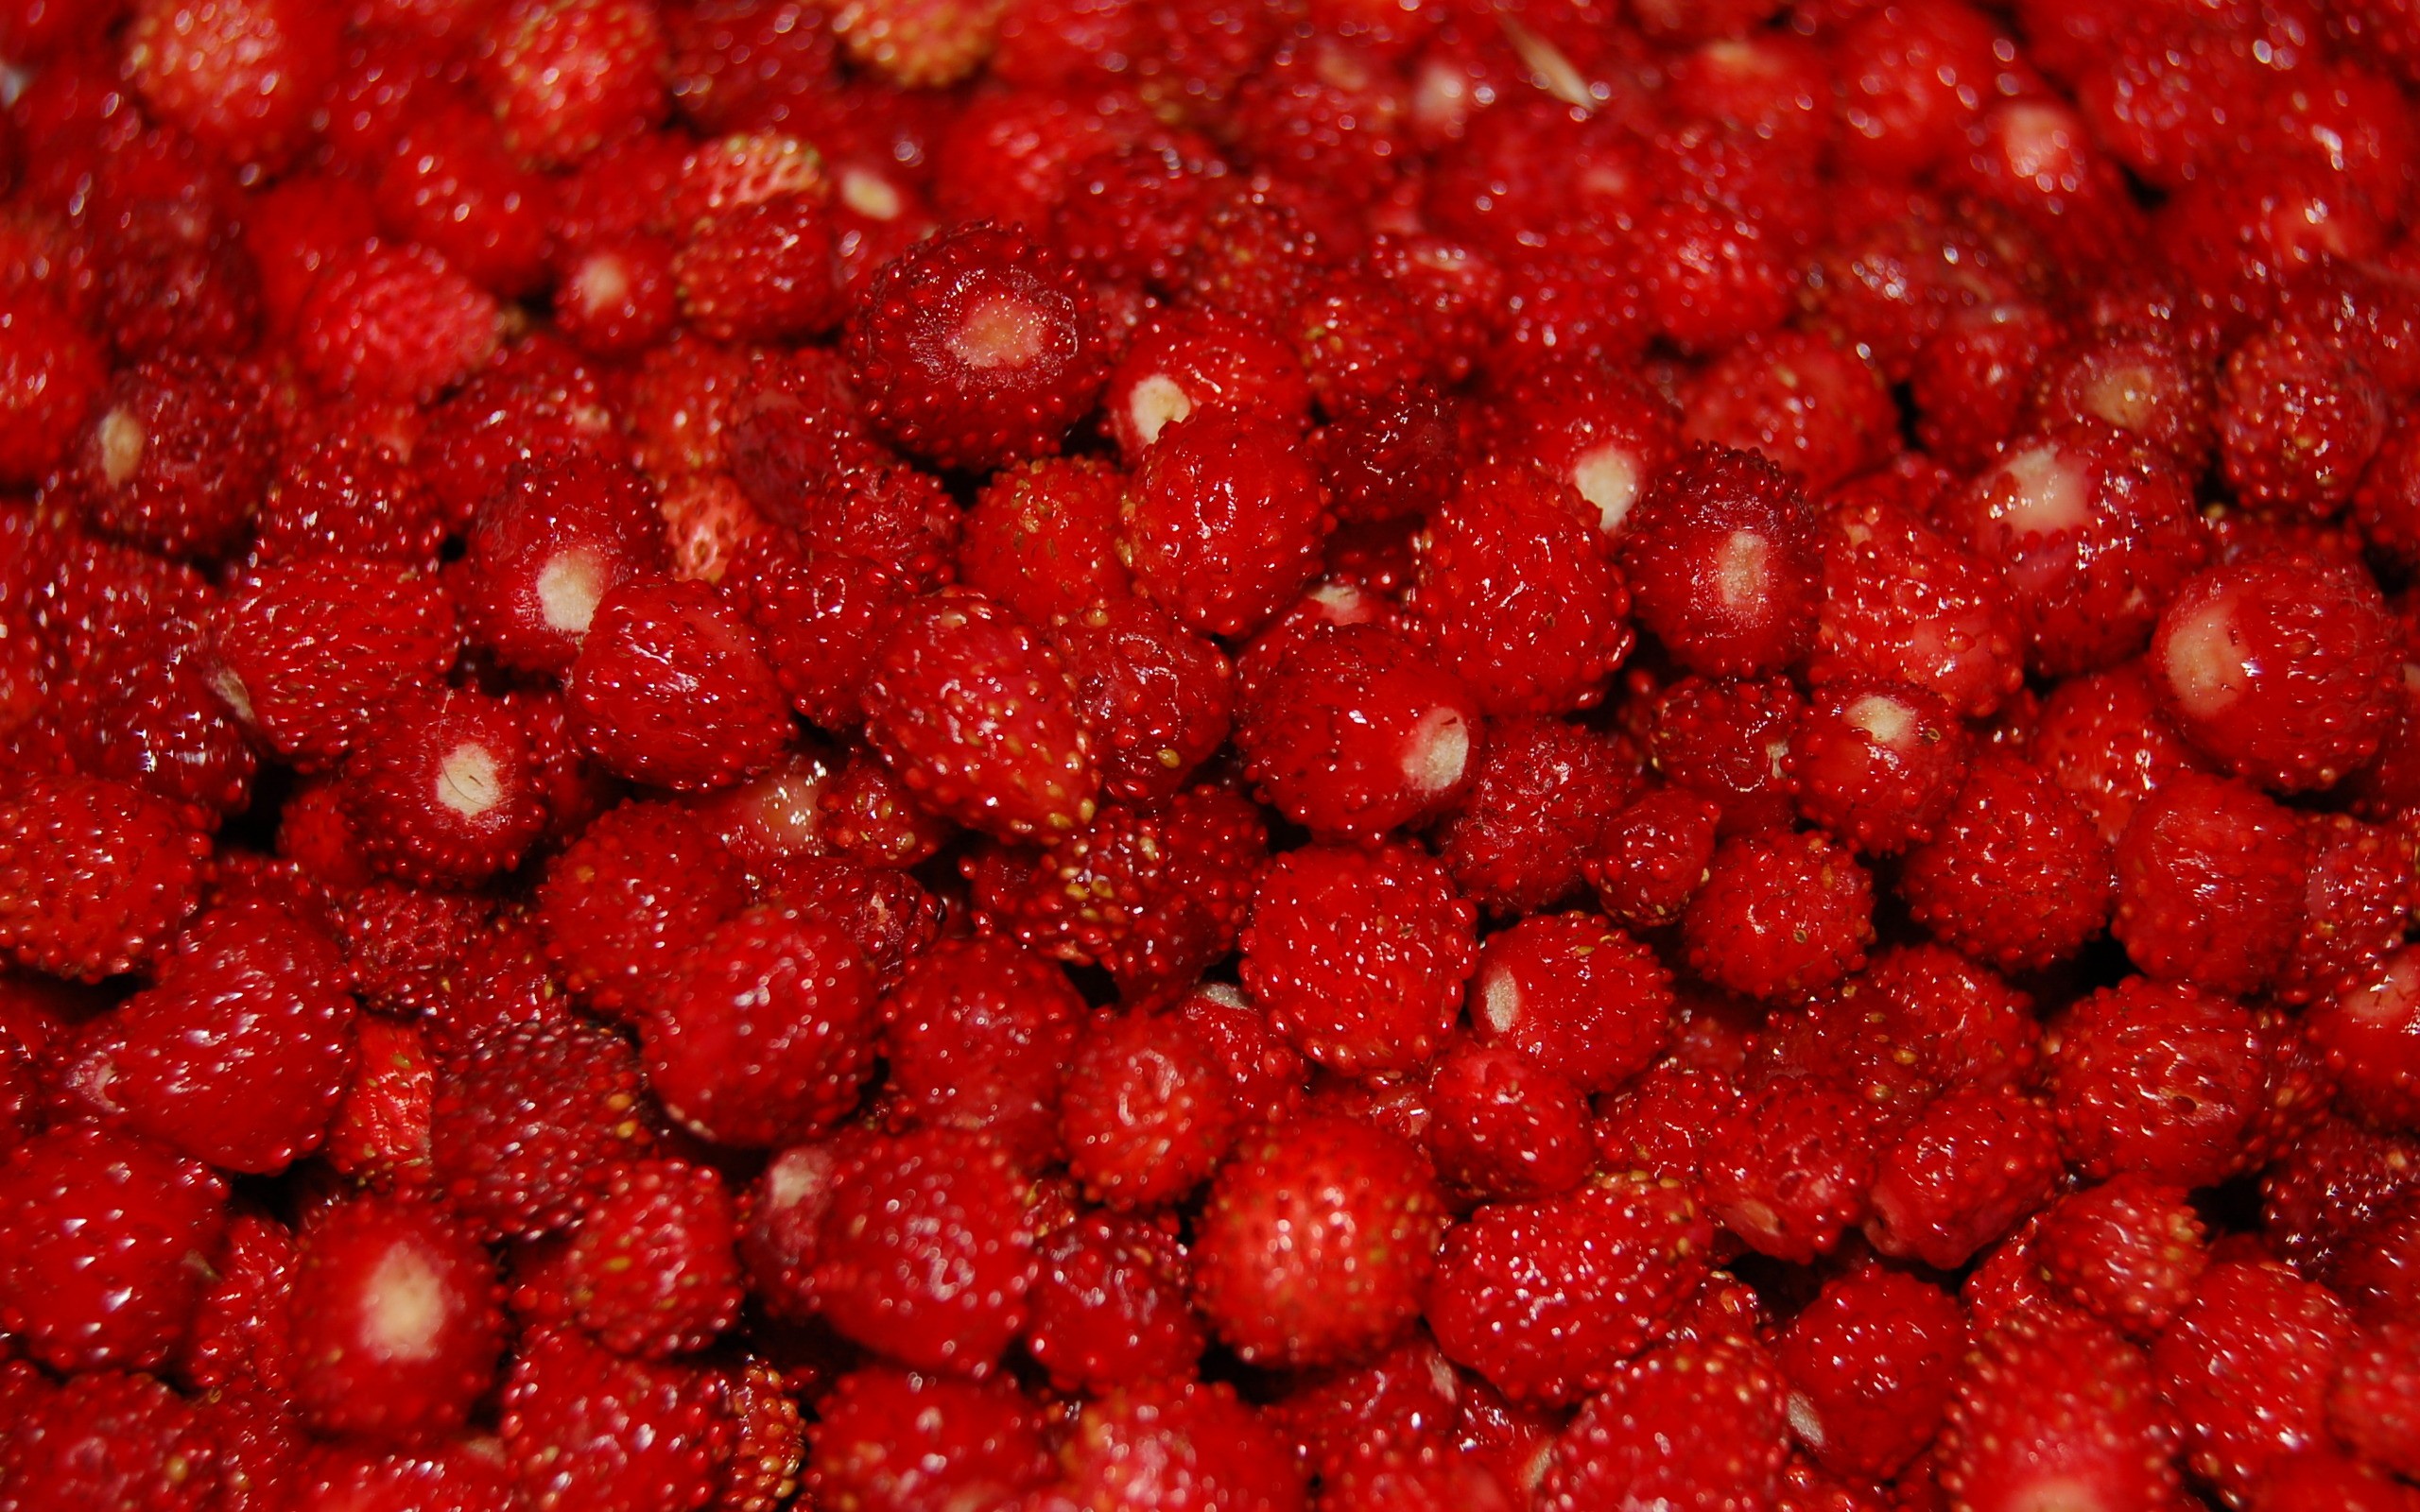 fruits, food, strawberries - desktop wallpaper